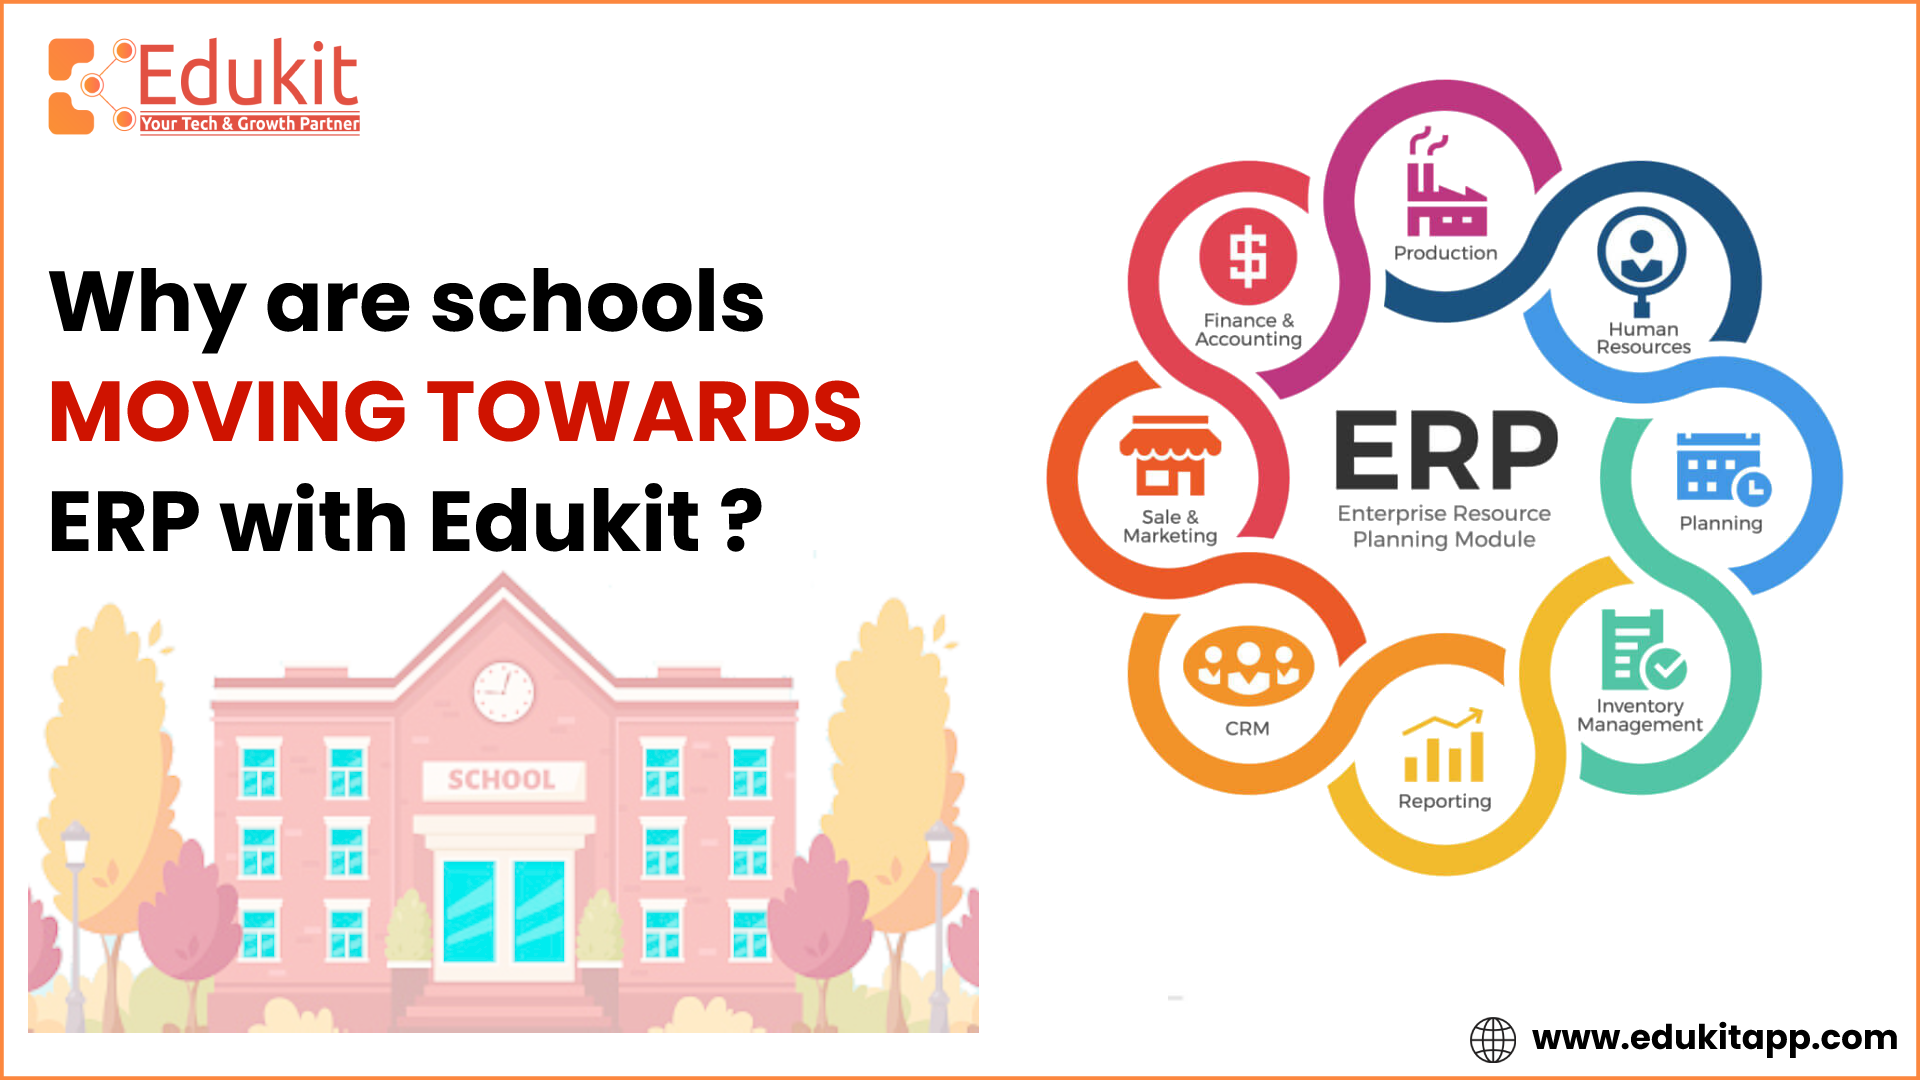 Why are schools moving towards Erp with “Edukit” ? - Edukit